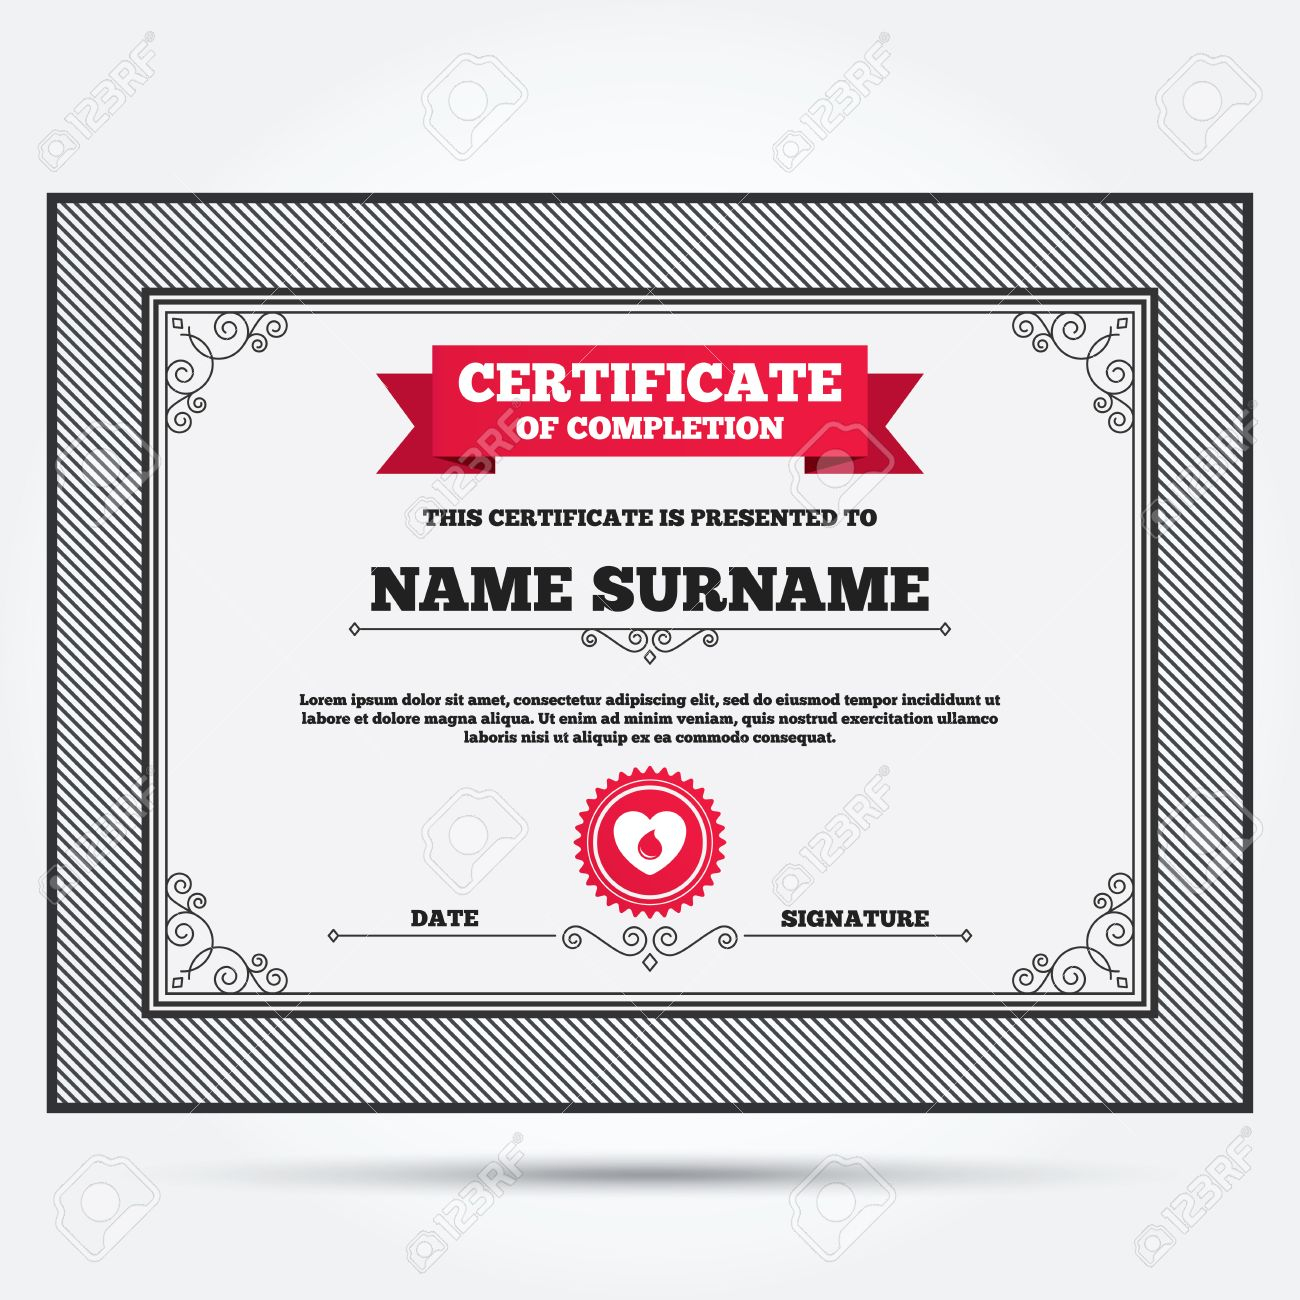 Donation Certificate Template. Certificate Of Completion Intended For Donation Certificate Template